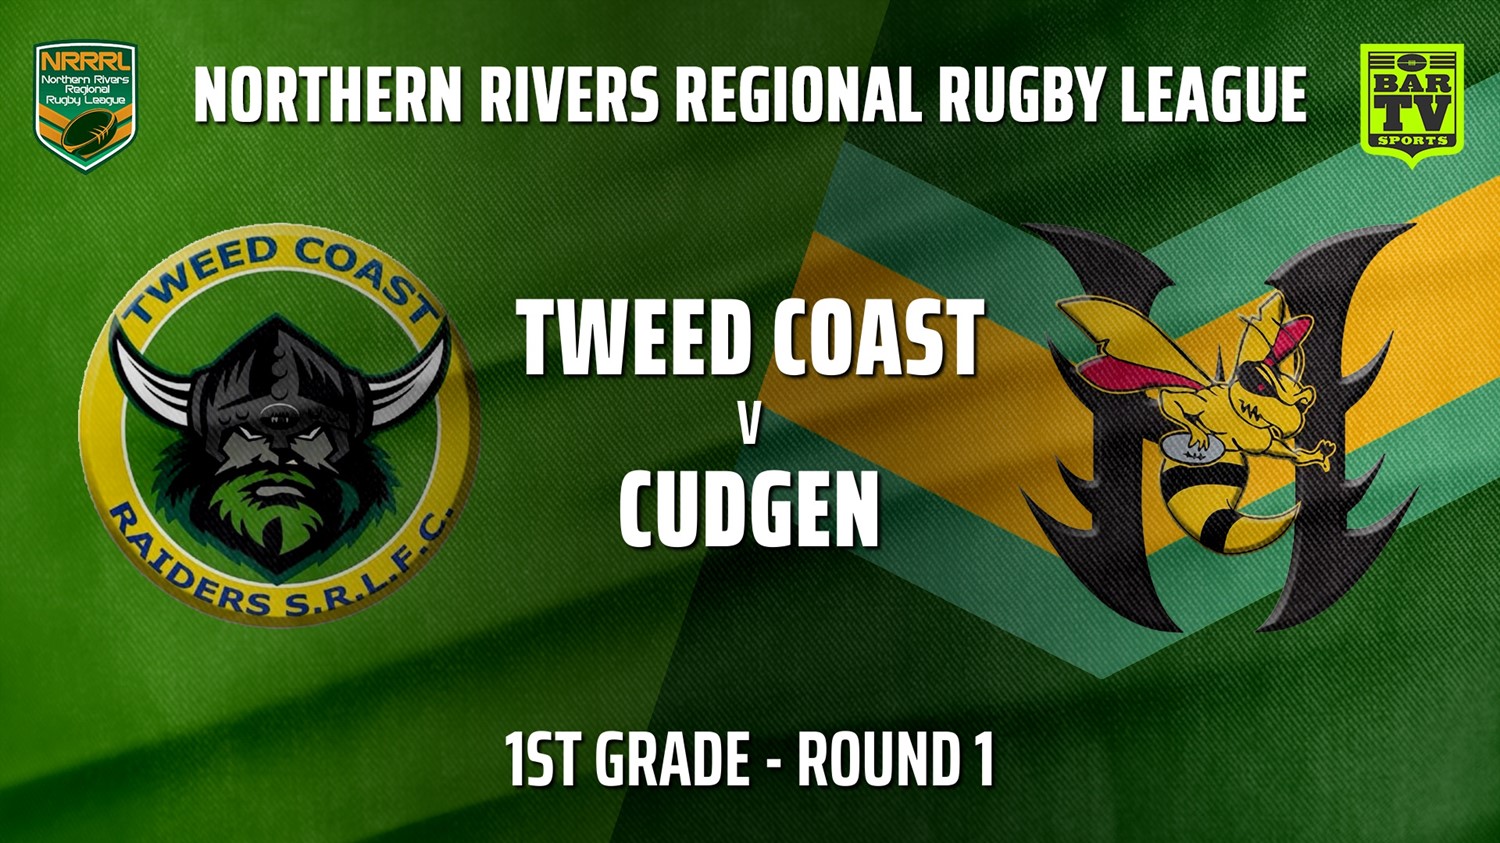 210502-NRRRL Round 1 - 1st Grade - Tweed Coast Raiders v Cudgen Hornets Slate Image